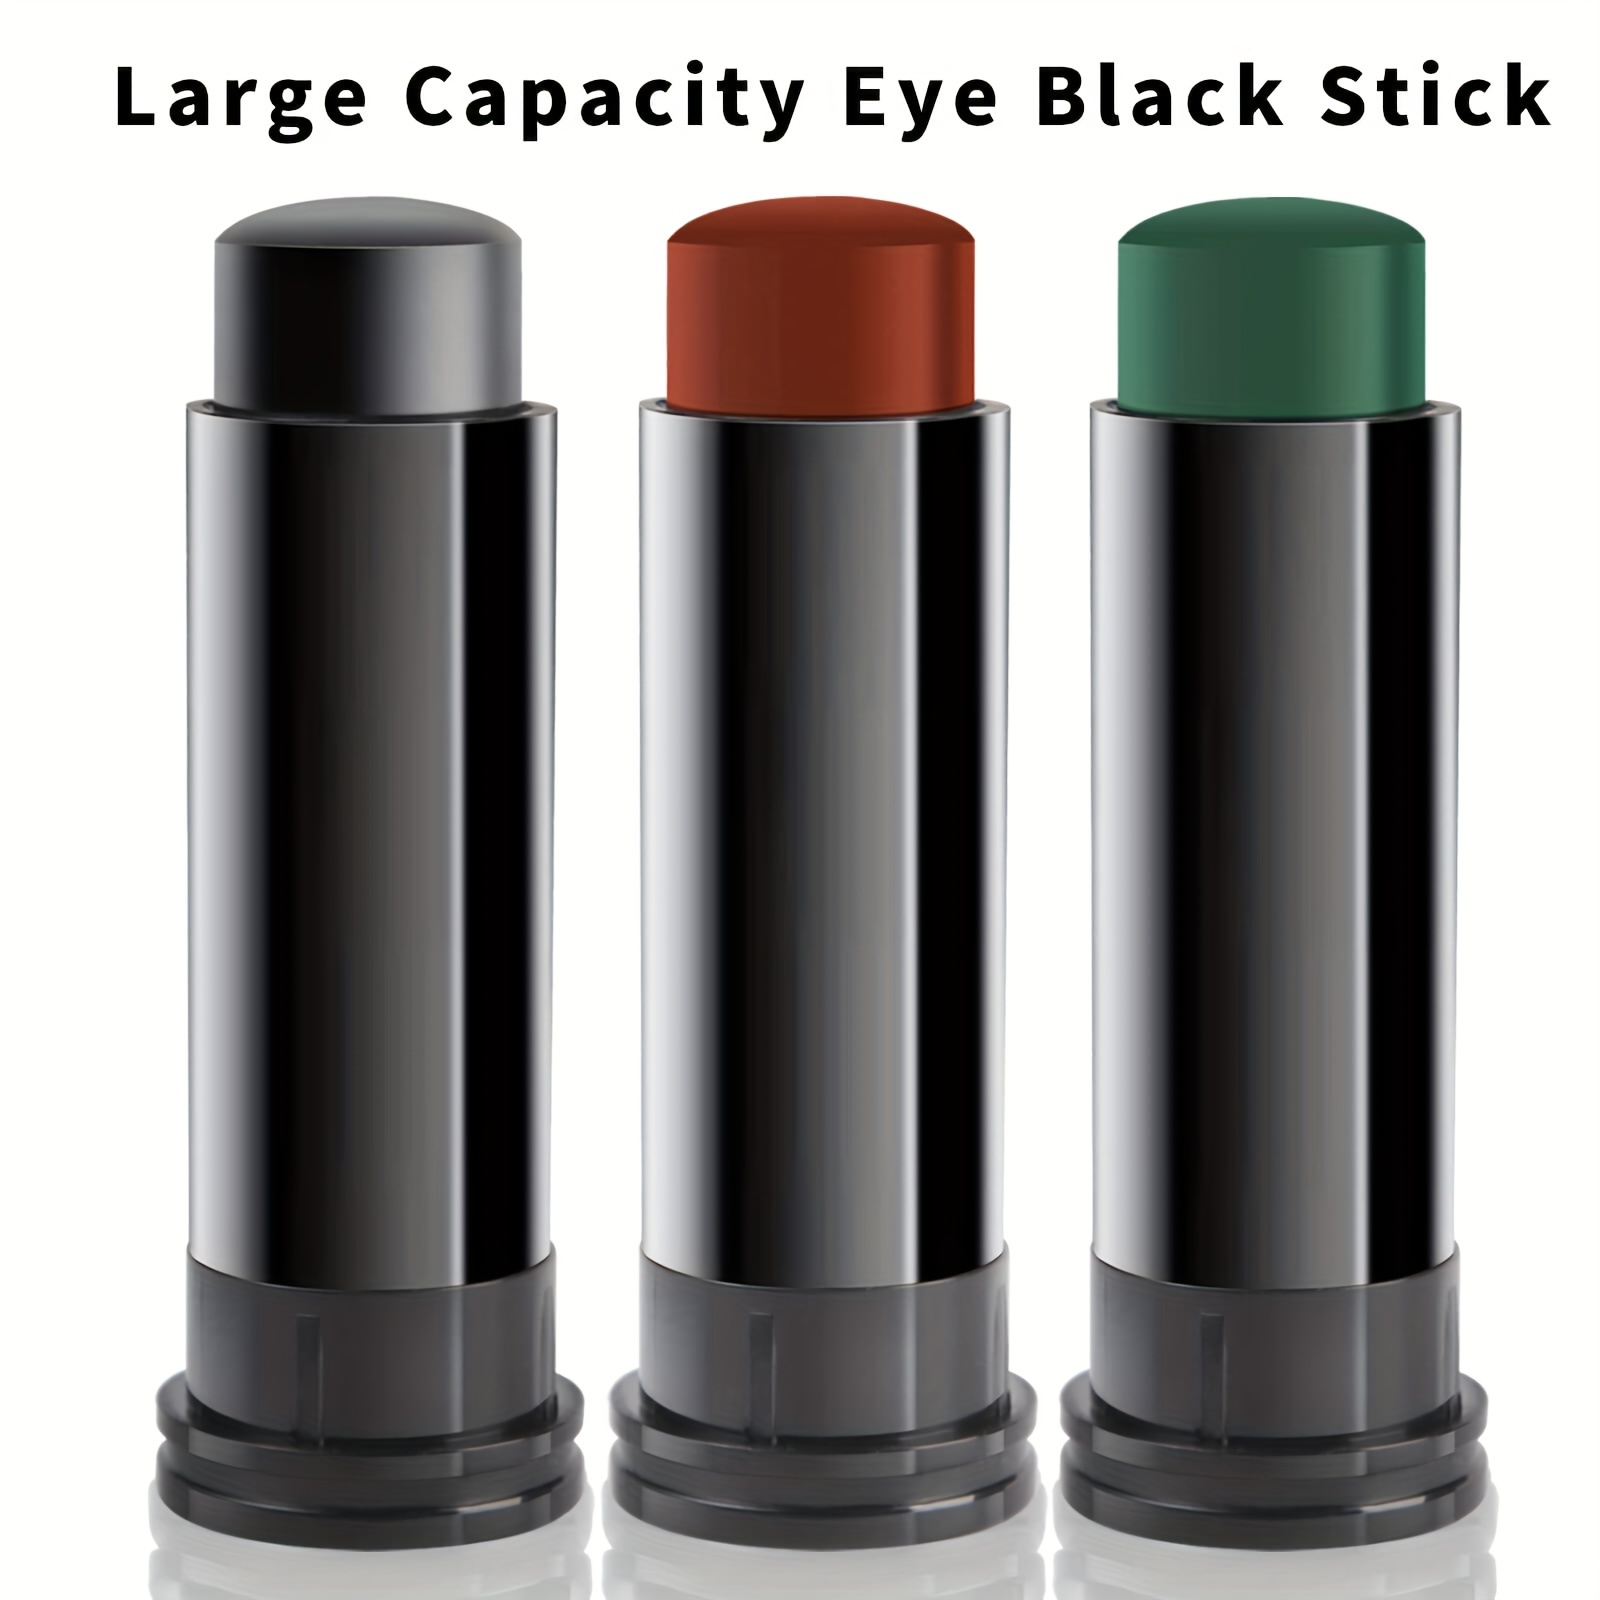 EyeBlack Battle Paint Eye Black Asst Color